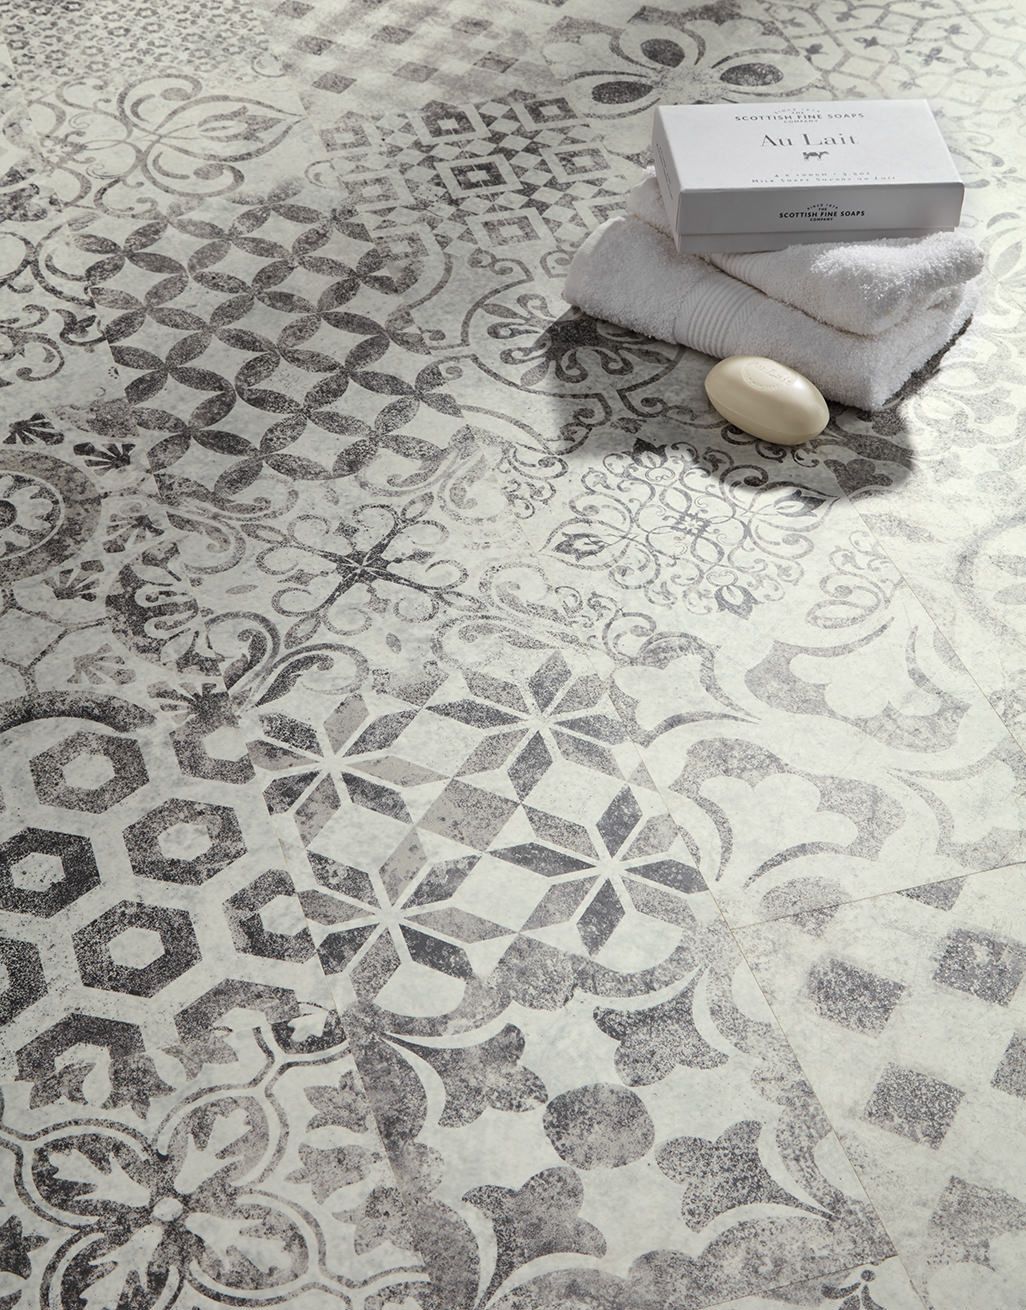 Valencia Tile Retro Black Laminate, Black And White Tile Effect Laminate Flooring